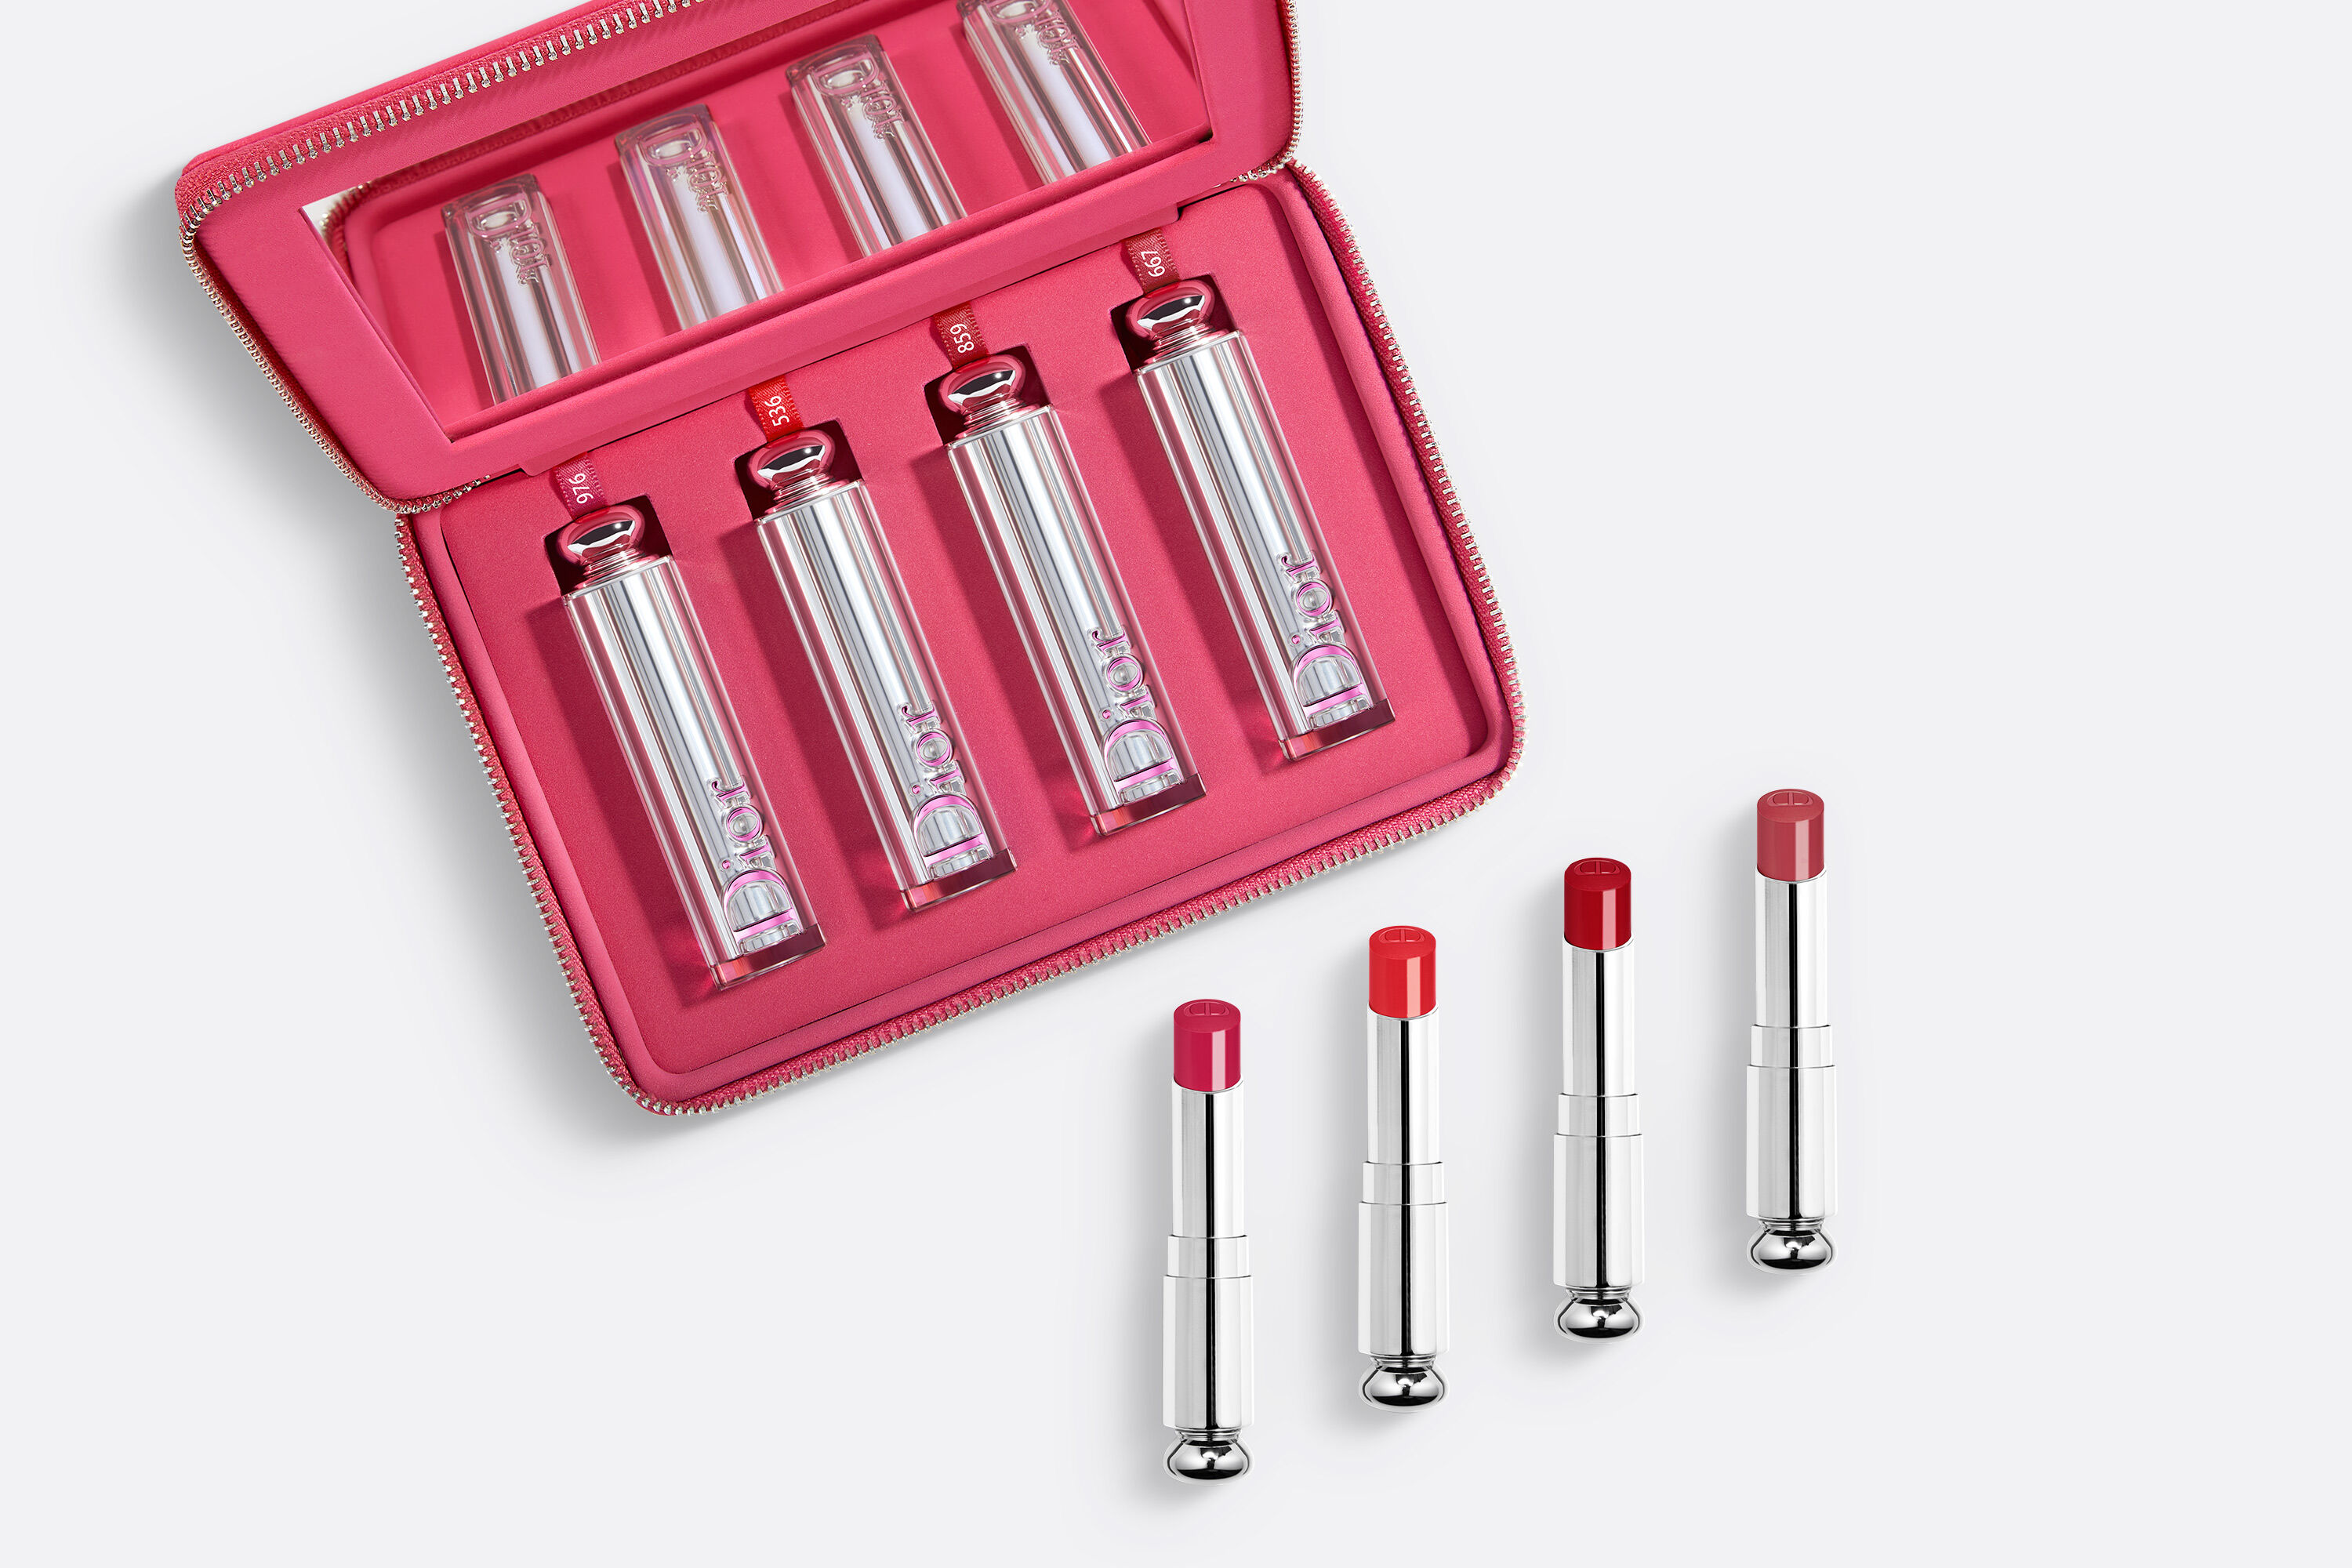 Dior Lipstick Case  Hook Set   SLG Organizer  Small Leather Goods  Organizer